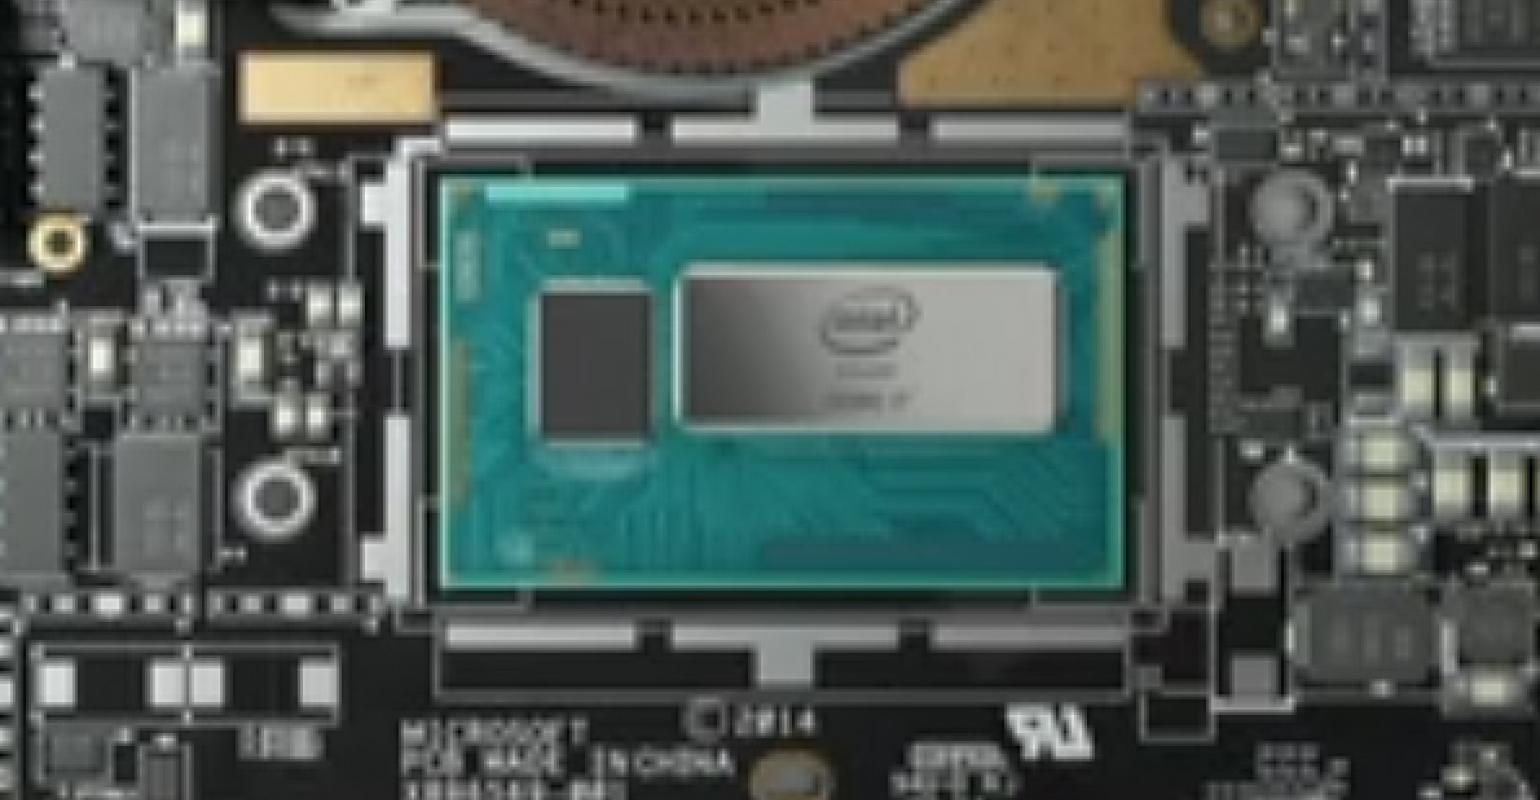 Intel 3 pro. Как выглядит контроллер питания на surface Pro 6.